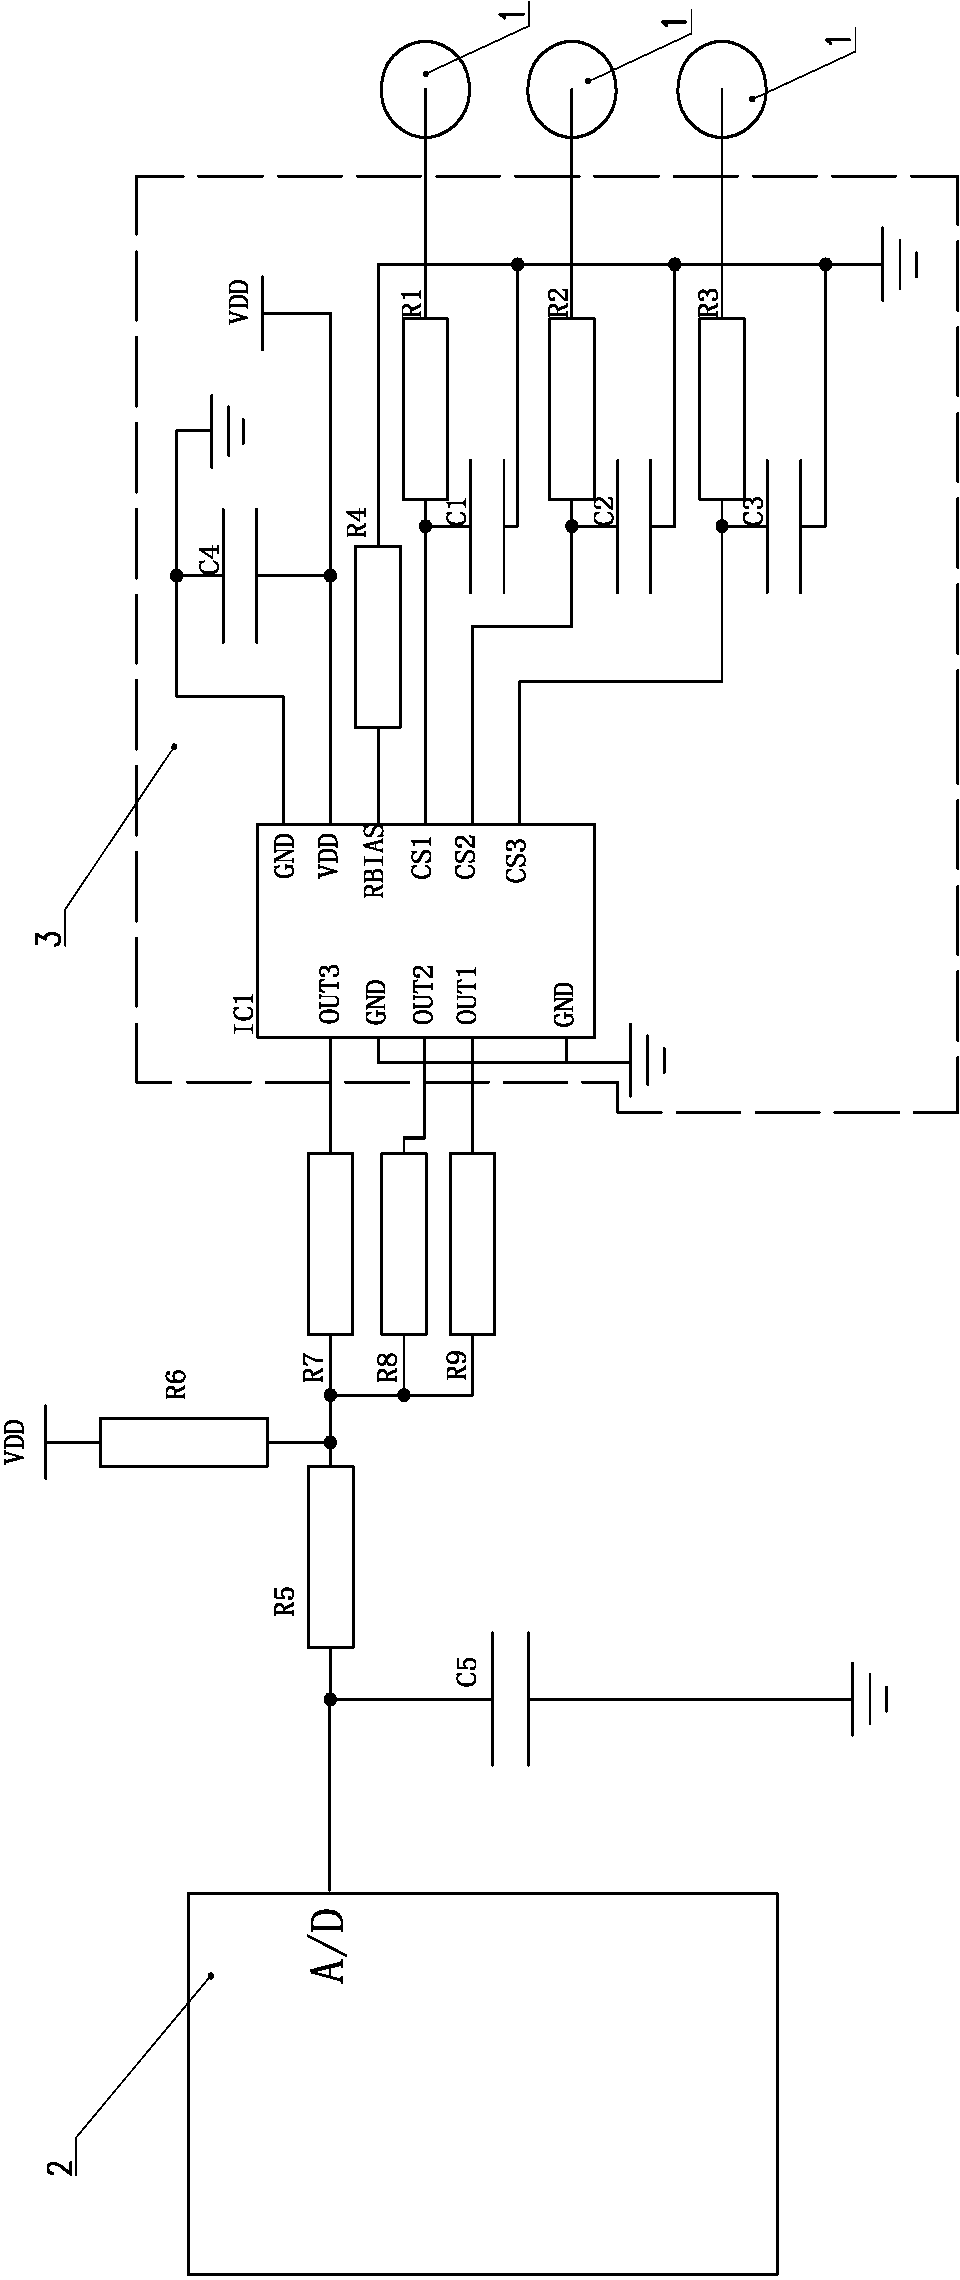 Portability key circuit